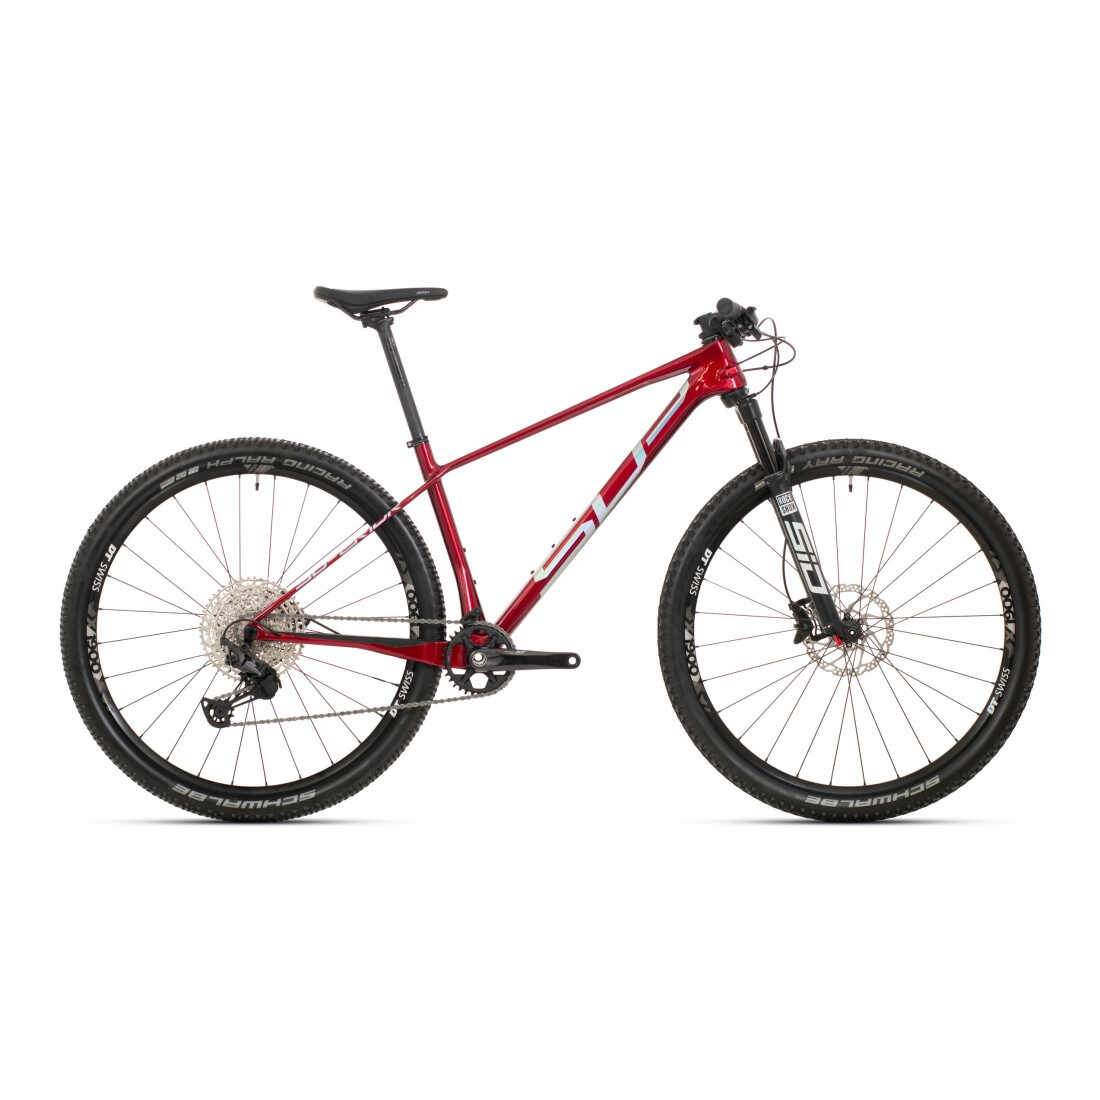 Bicicleta Superior XP 979 29 Gloss Dark Red Chrome 15.5 - (S)